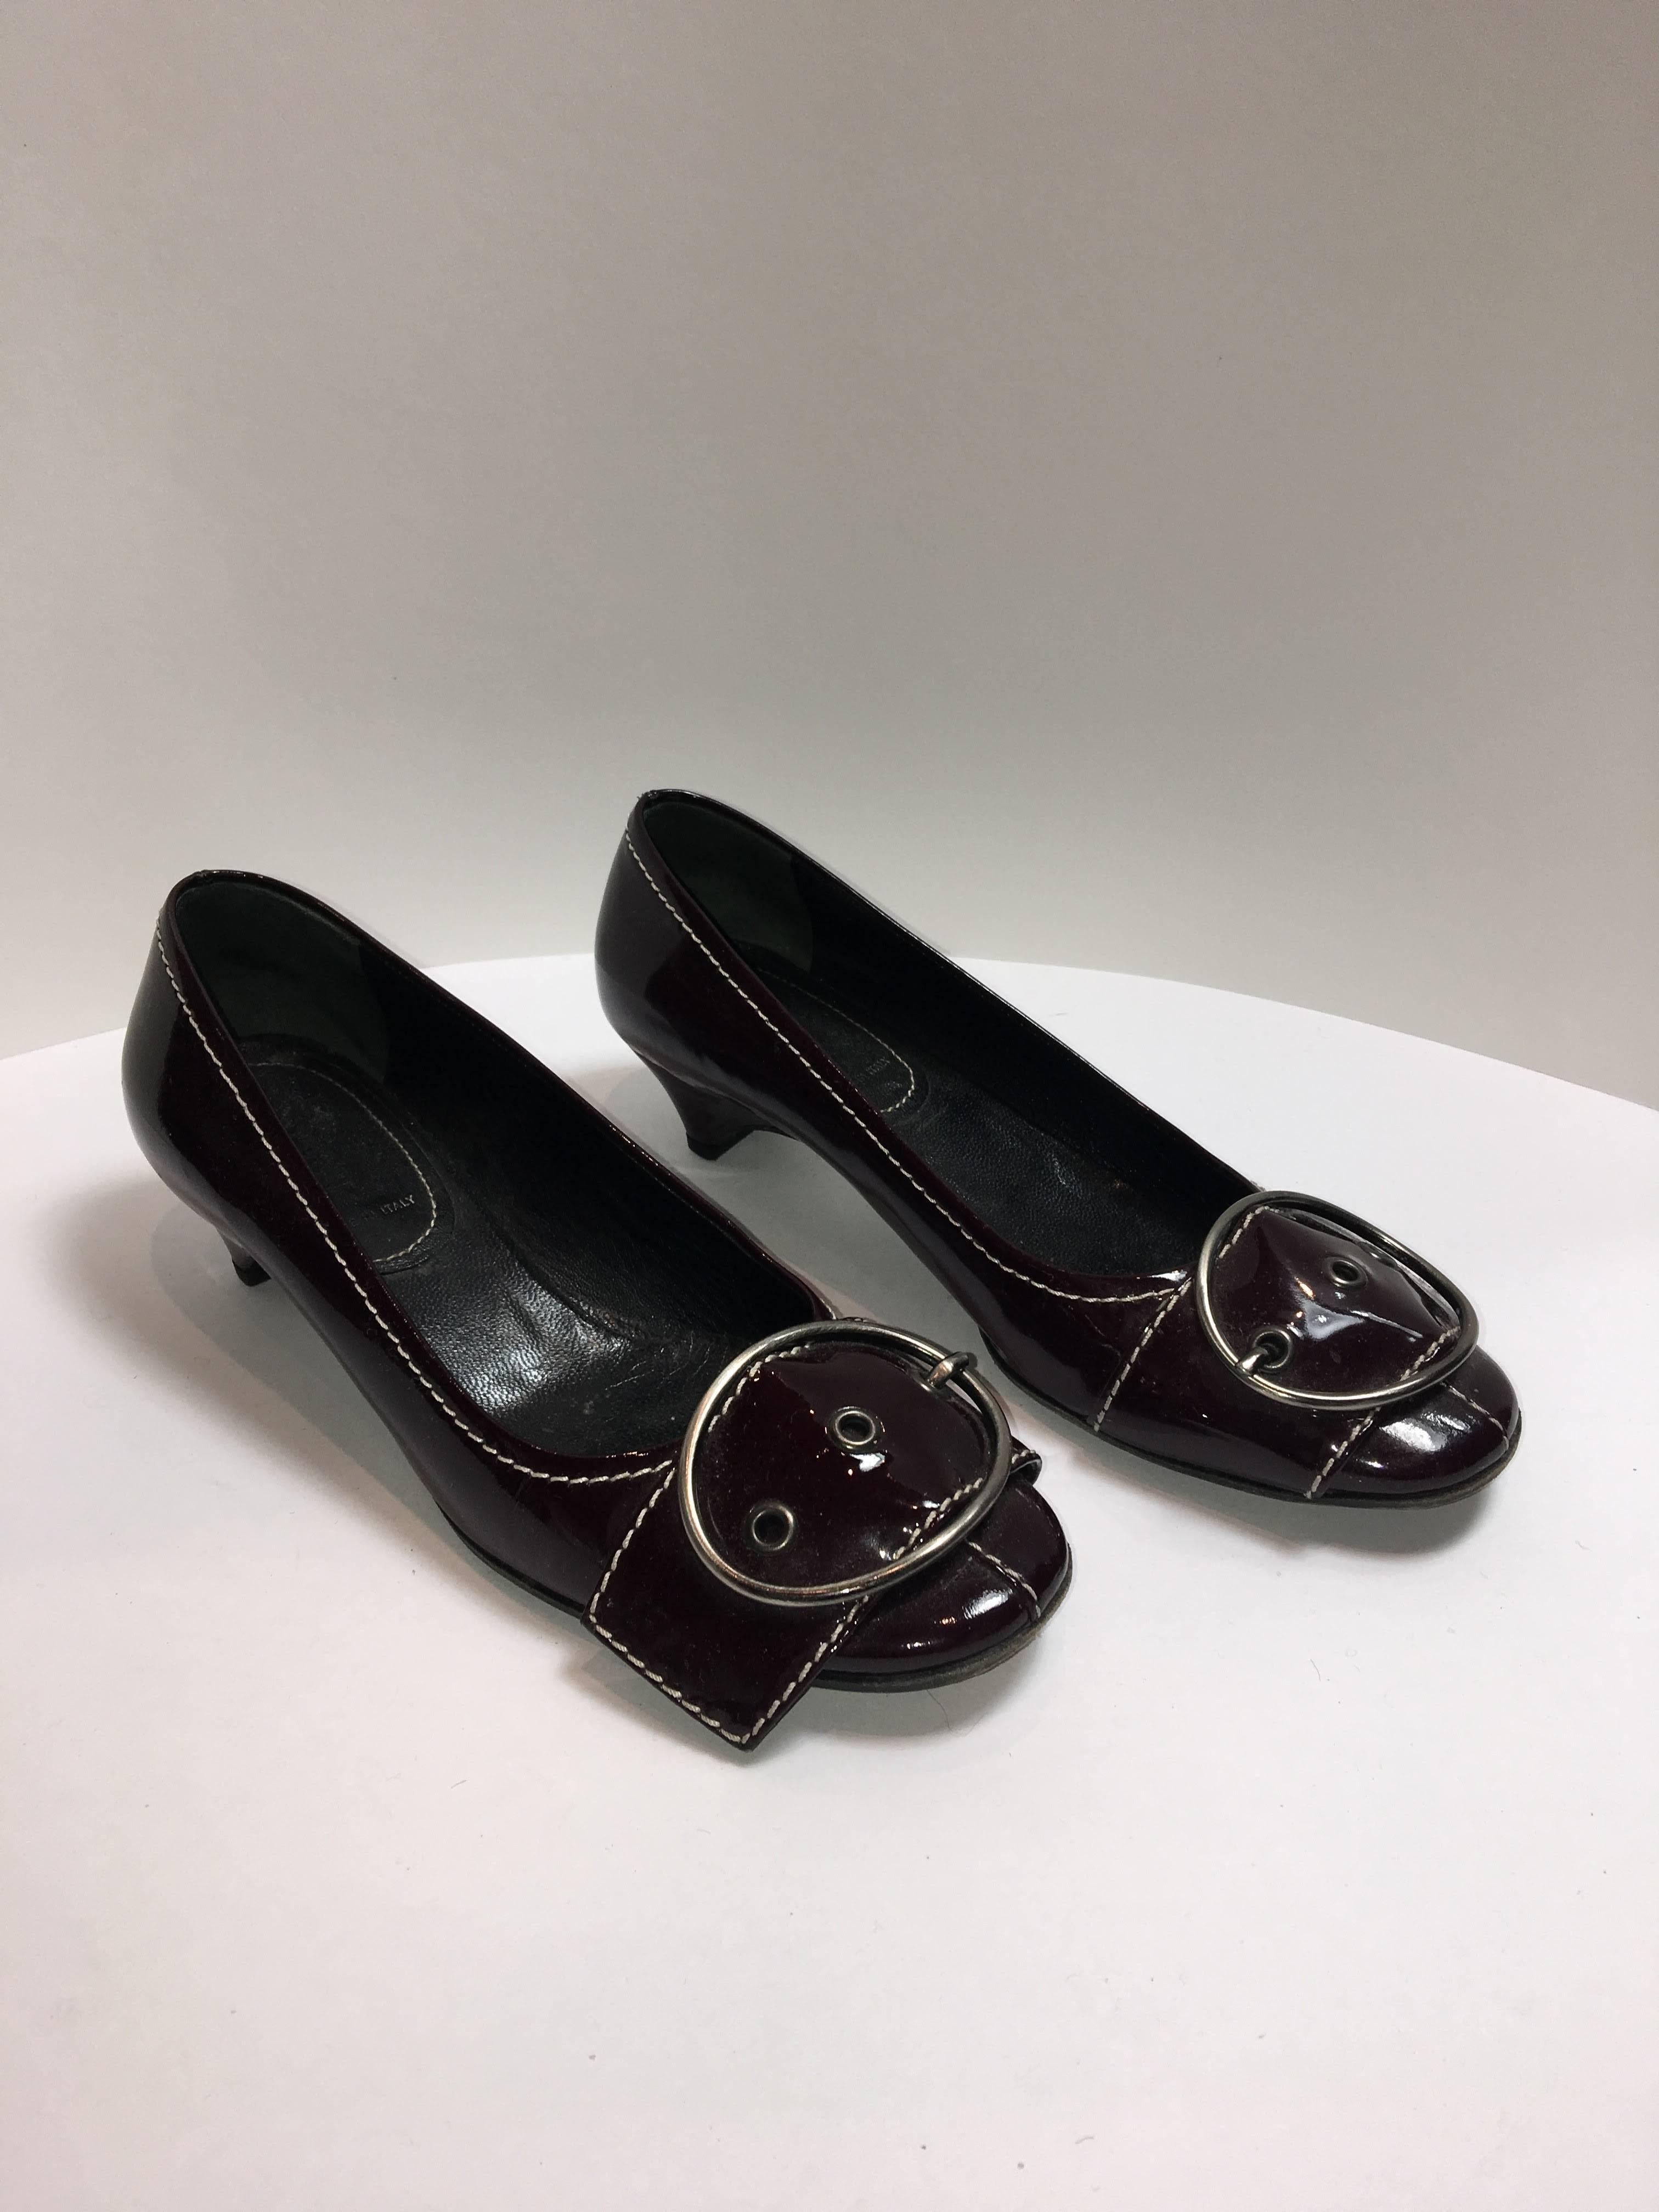 MiuMiu Dark Red Patent Leather Kitten Heel with big buckle detail on toe. 